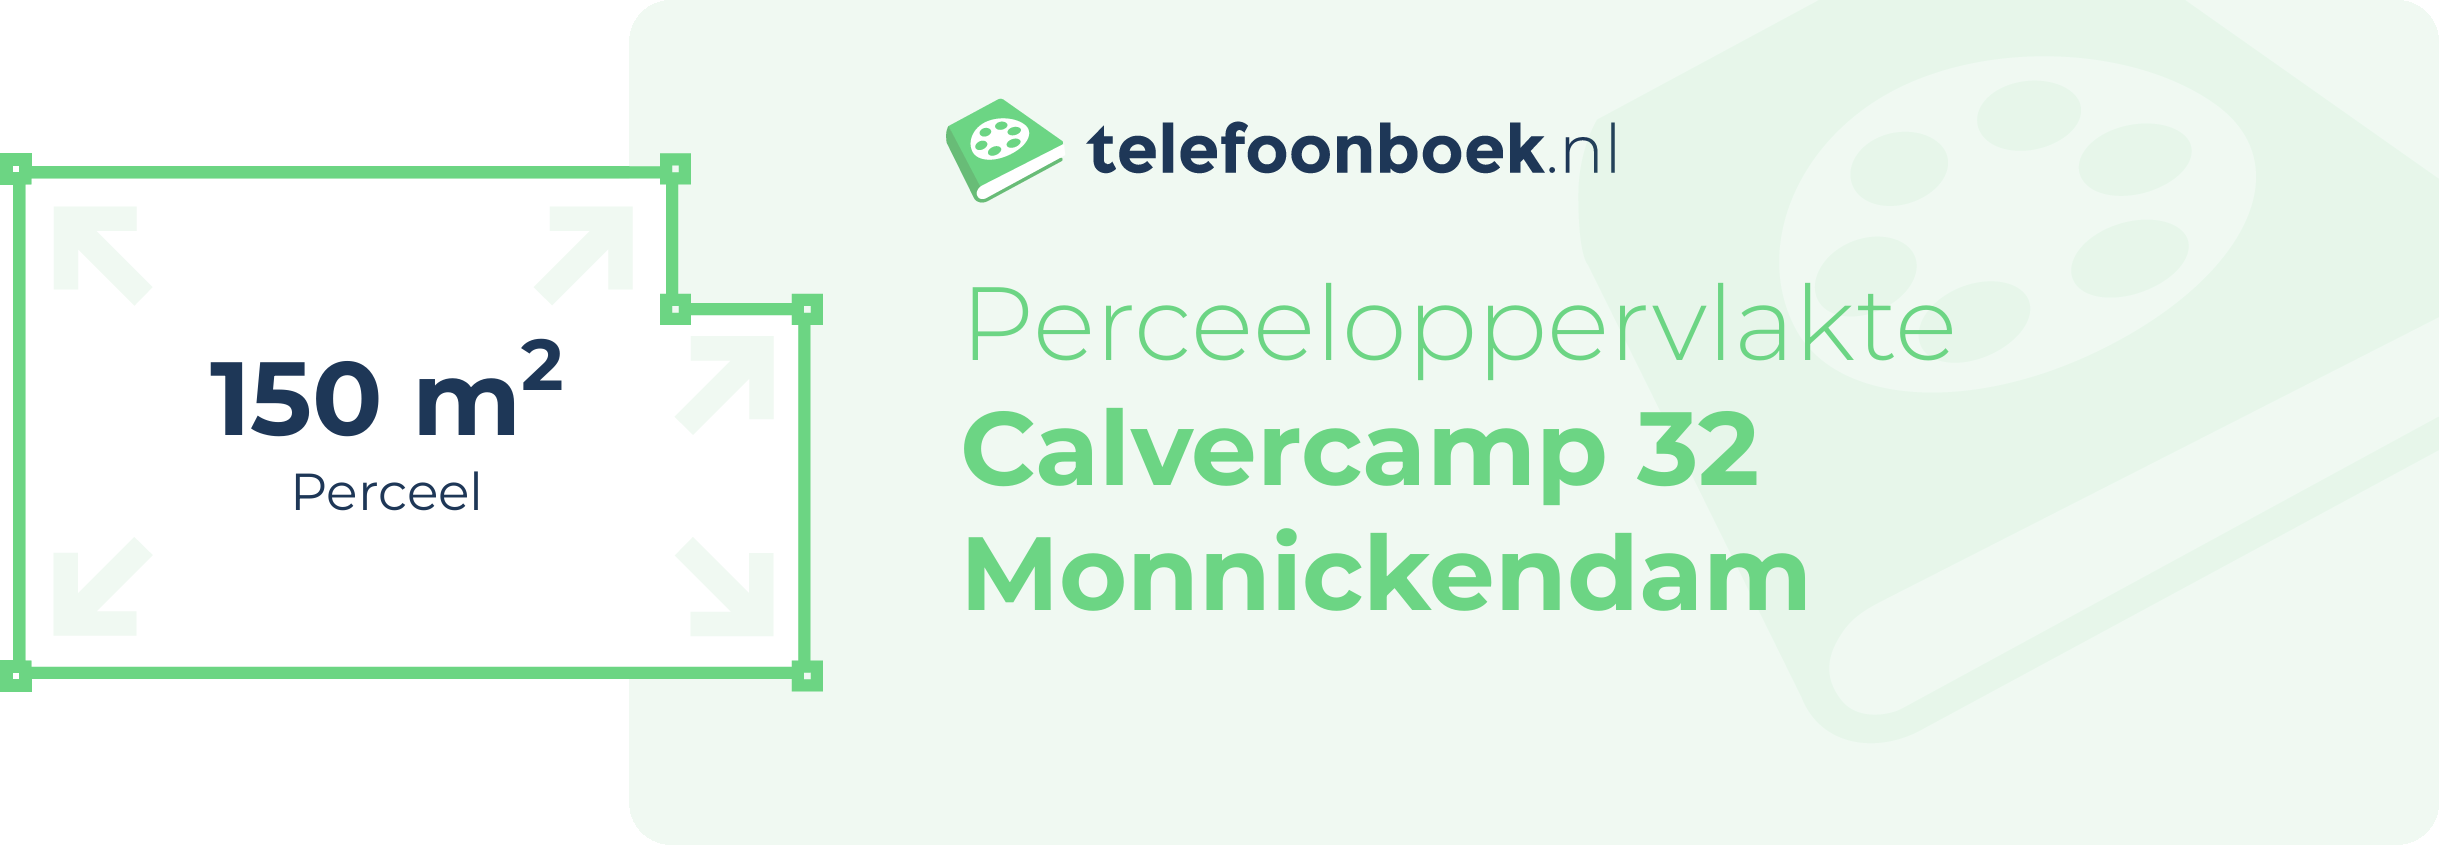 Perceeloppervlakte Calvercamp 32 Monnickendam